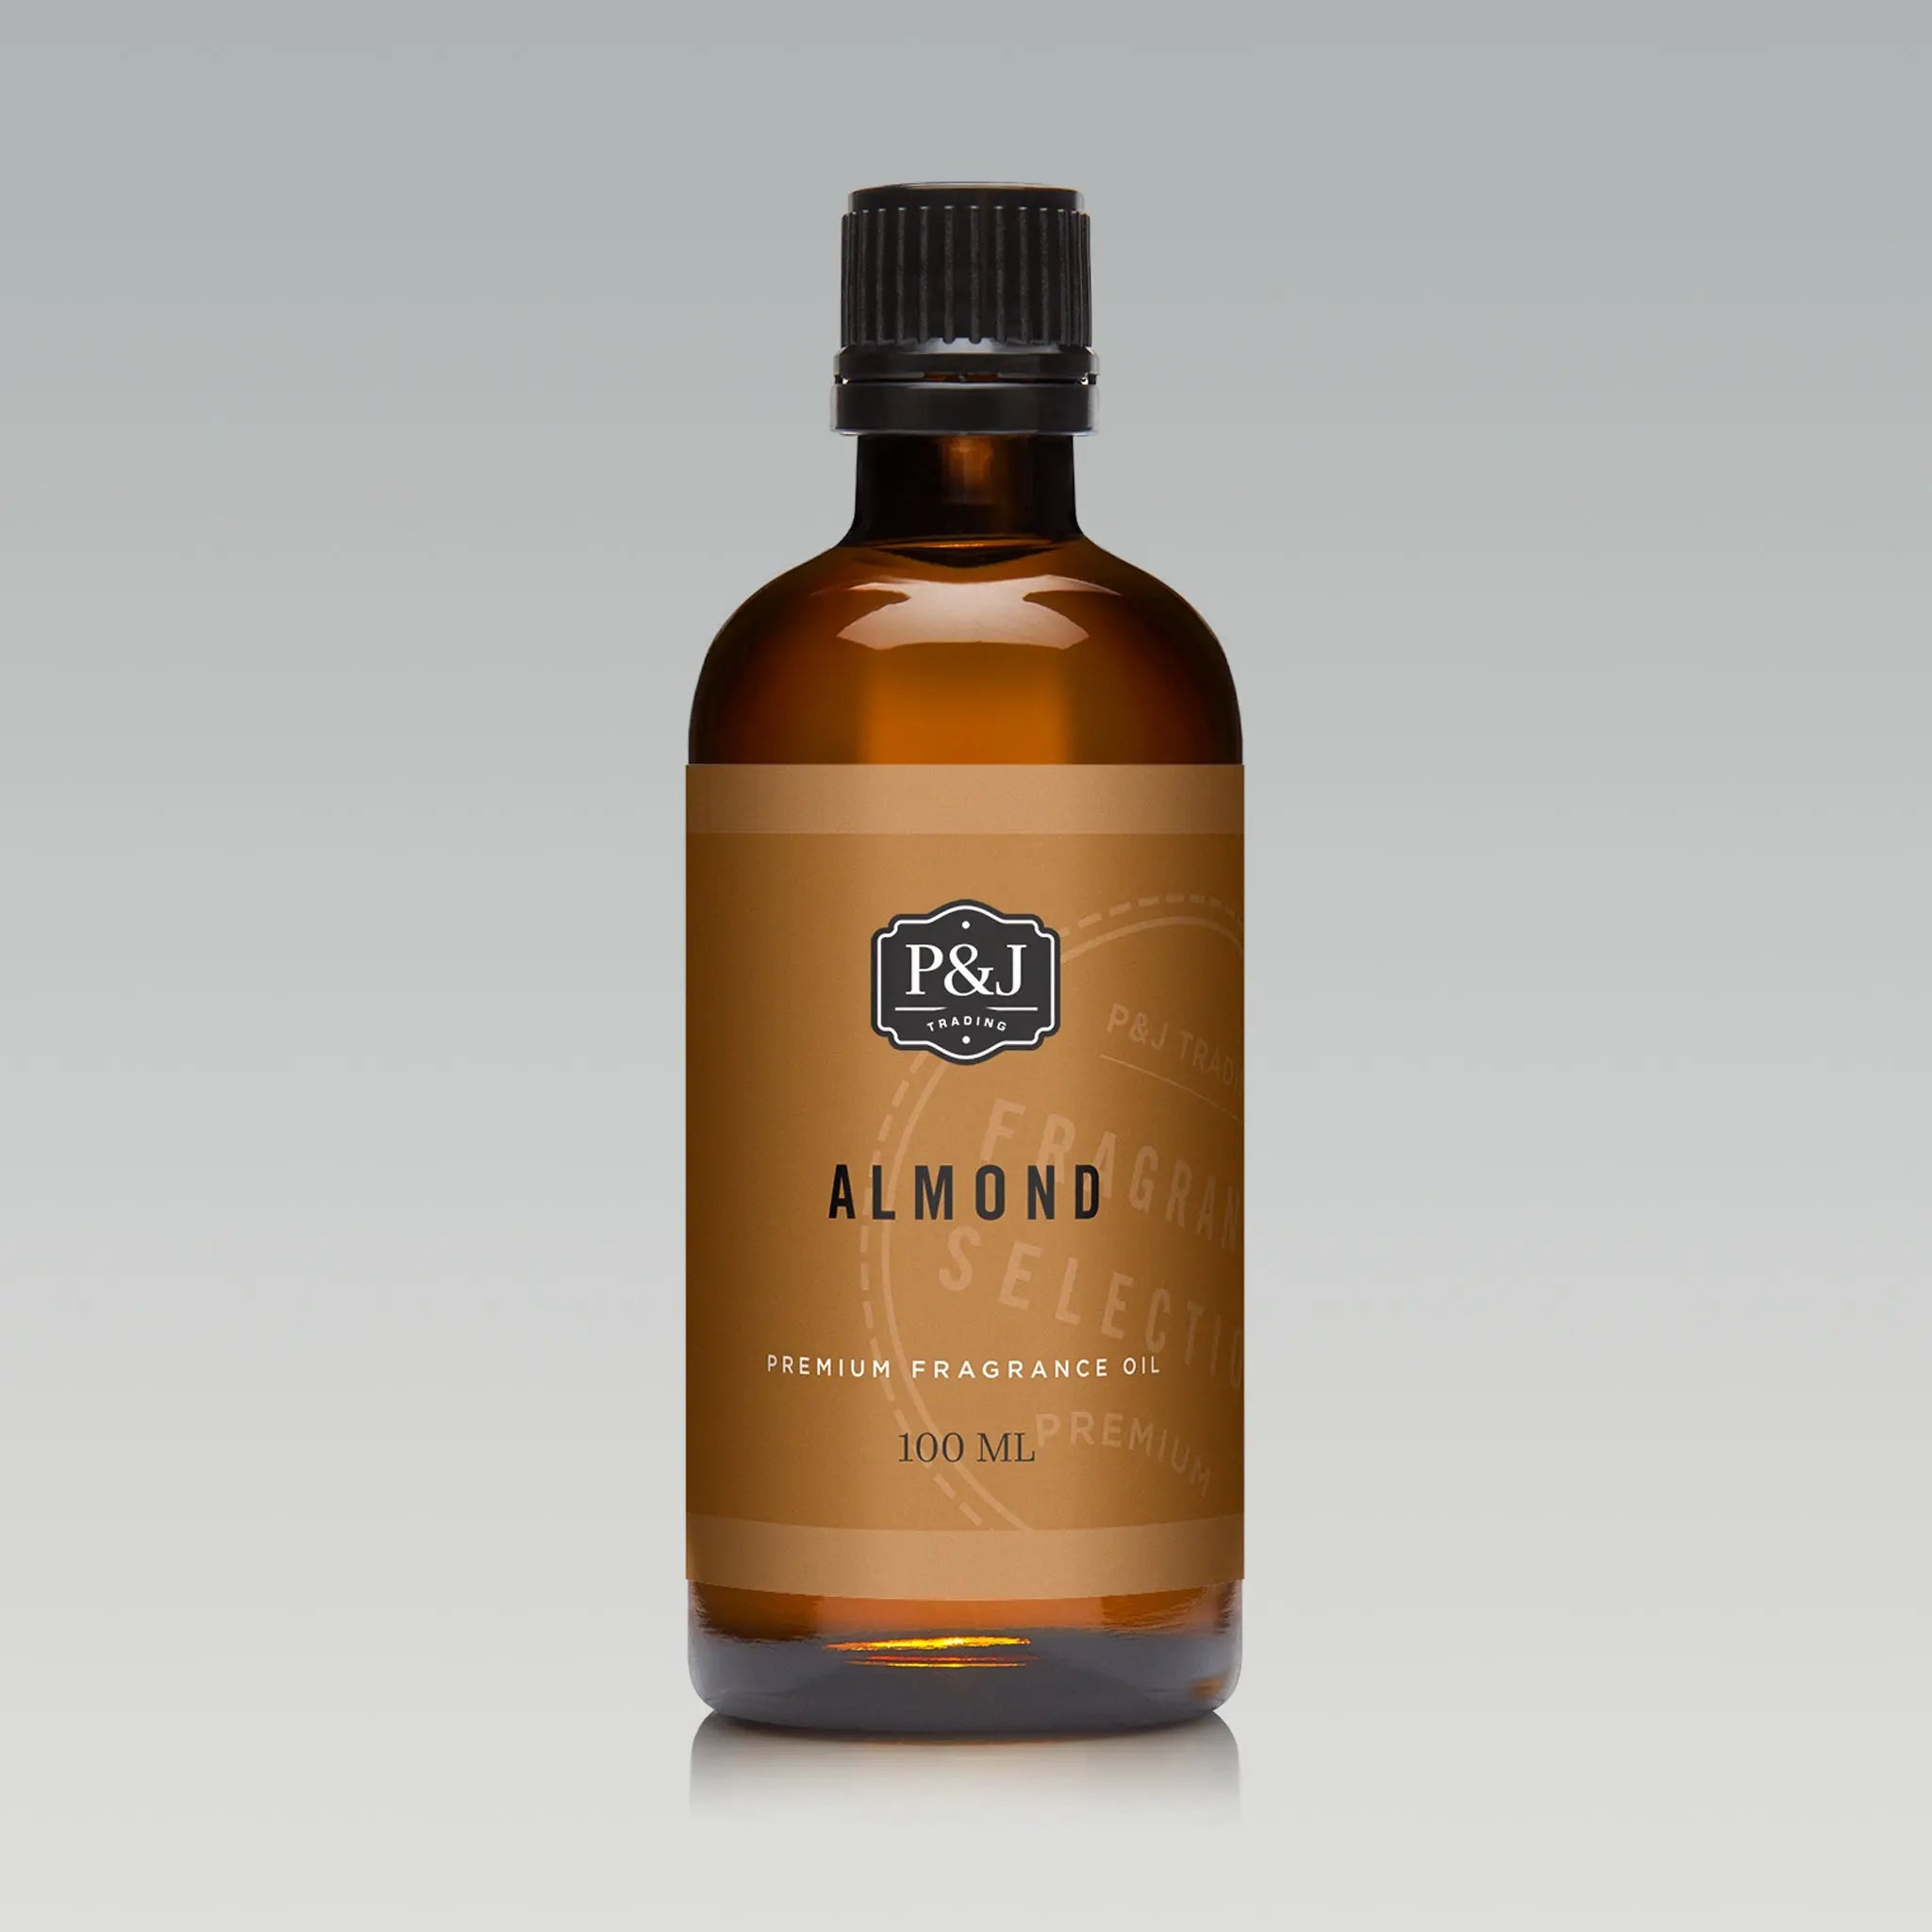 Almond Fragrance Oil